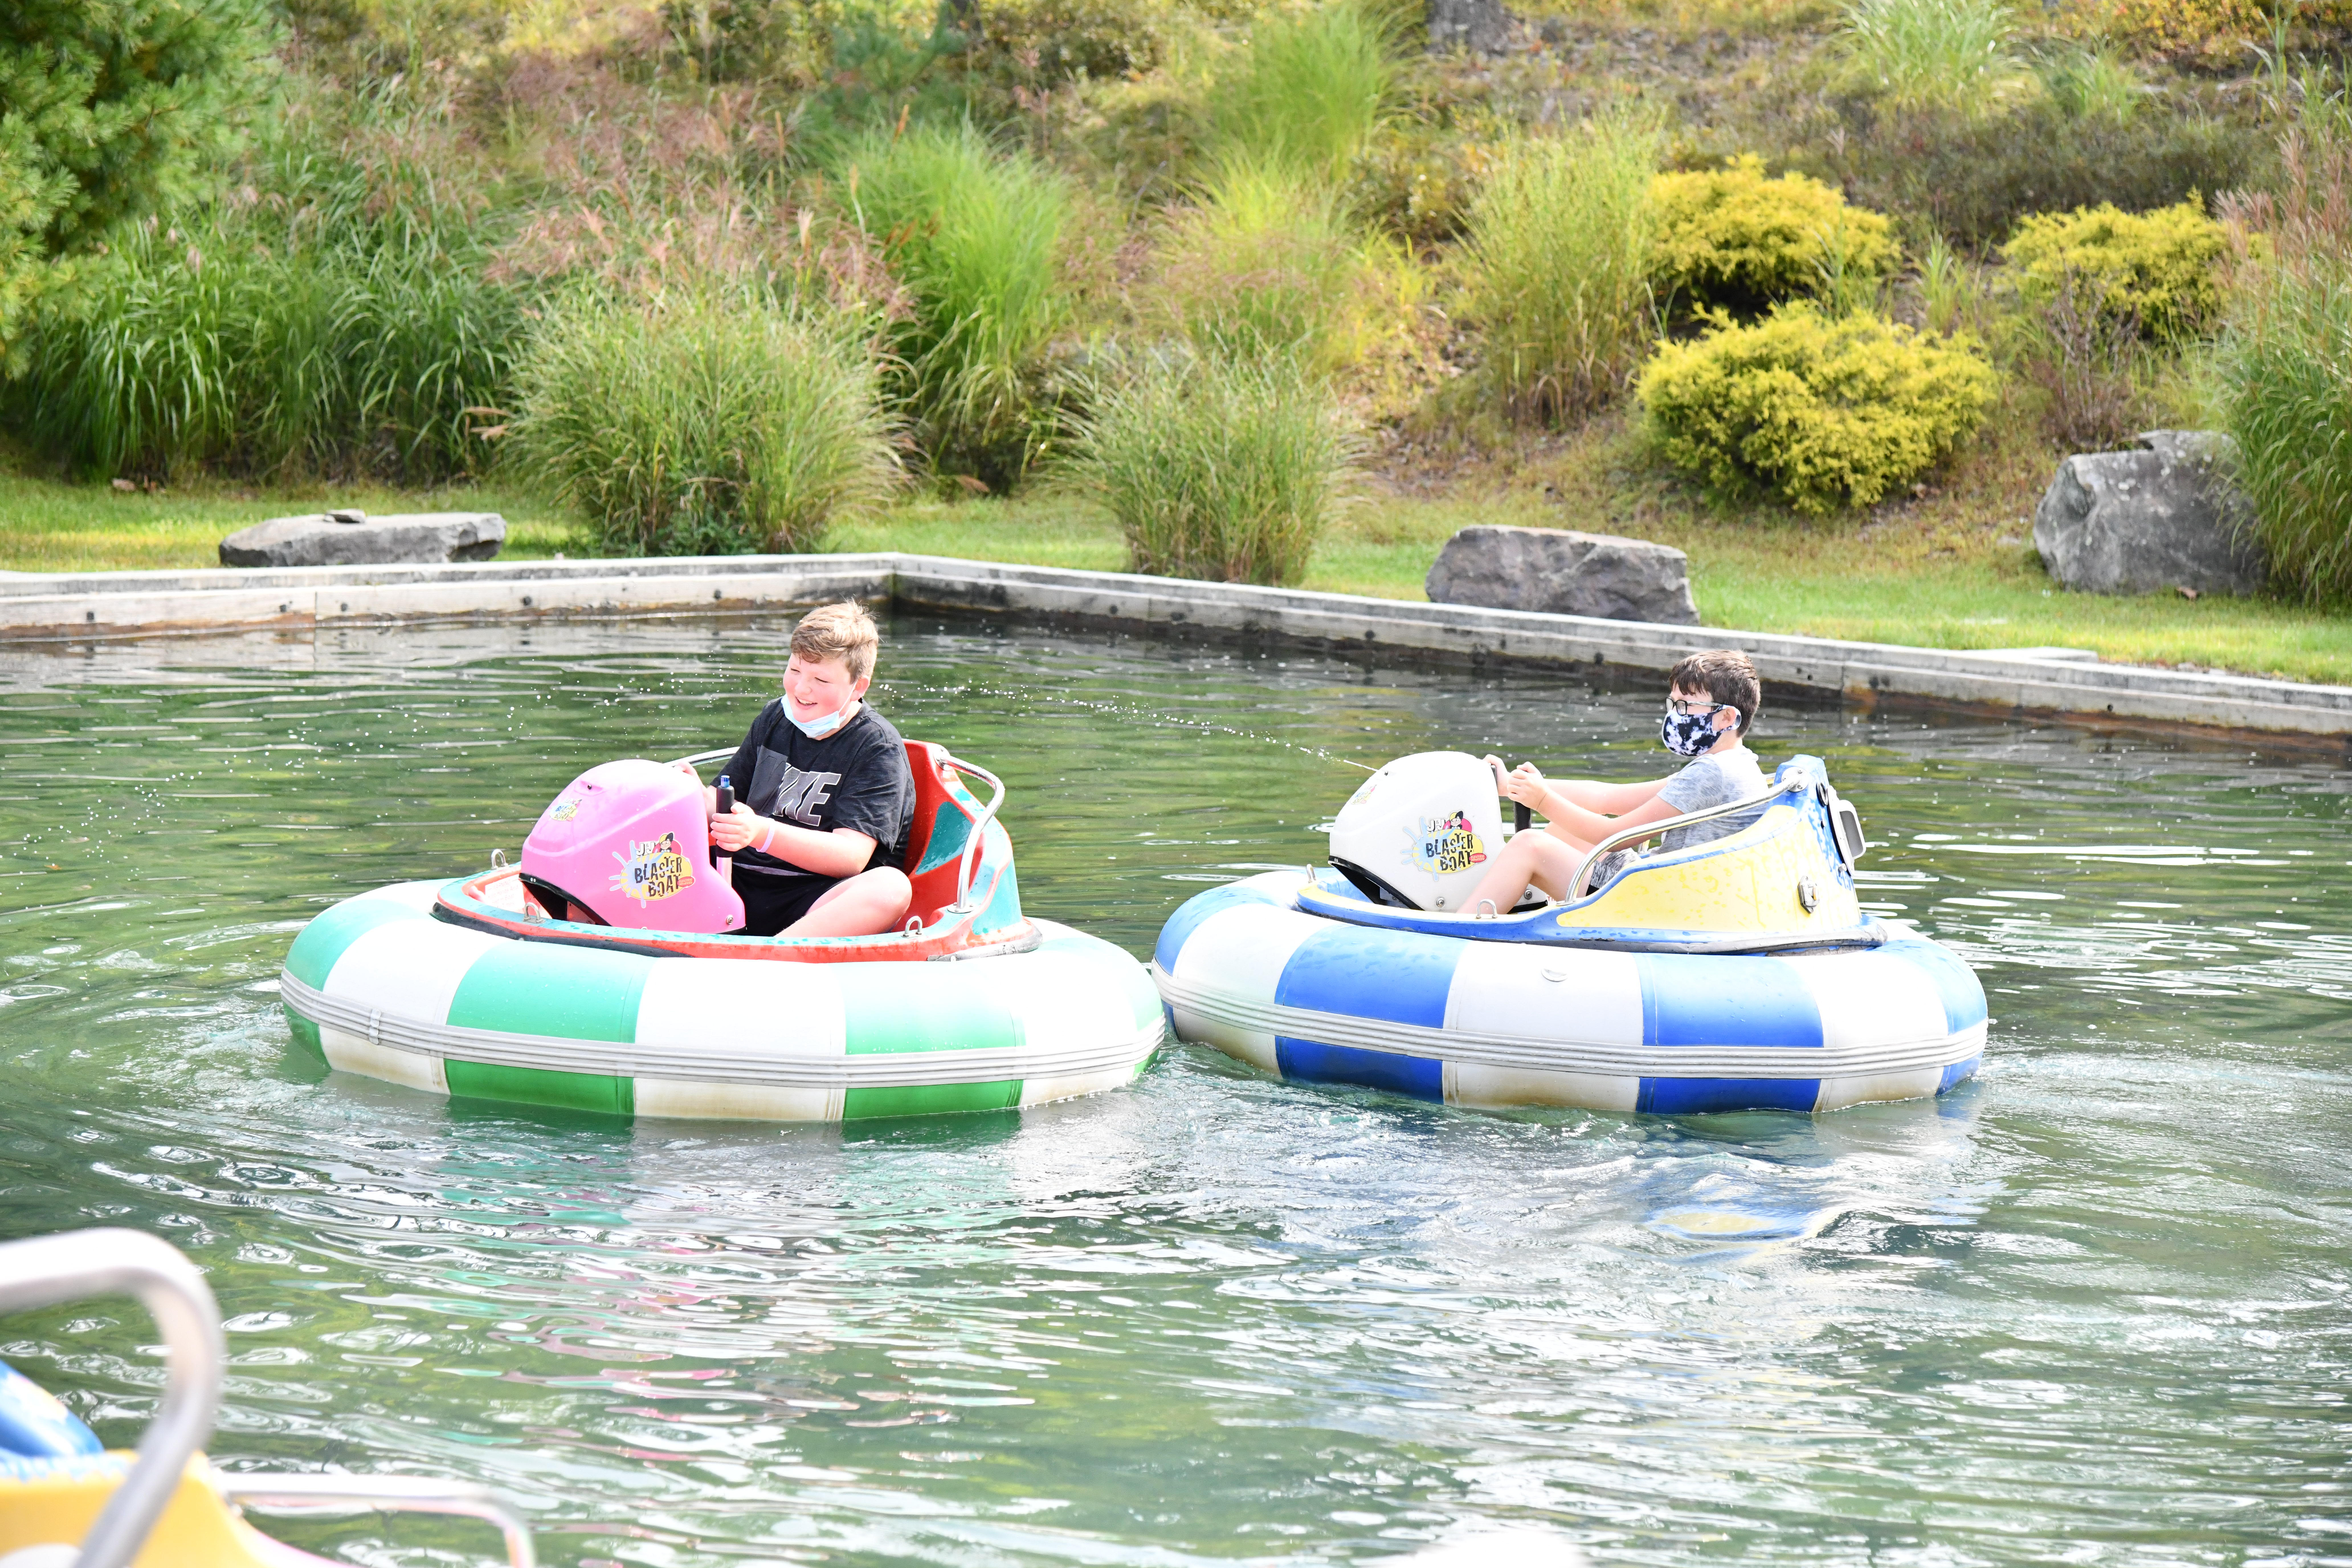 Two boys in bumper bots on water at Woodloch Resort in Poconos